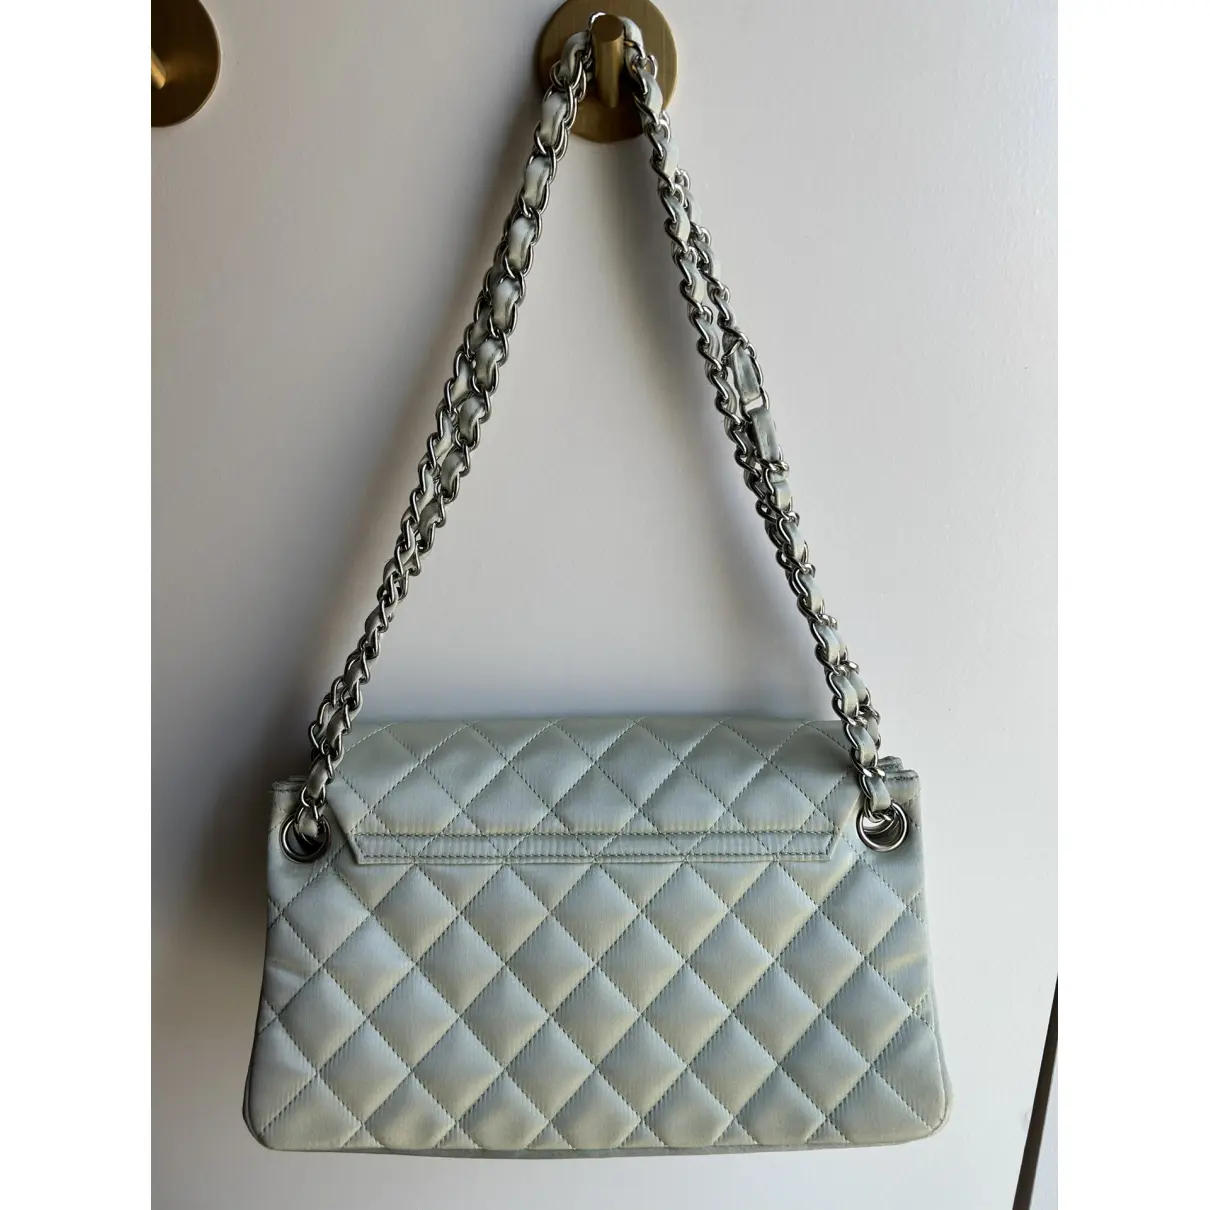 Business Affinity silk handbag Chanel